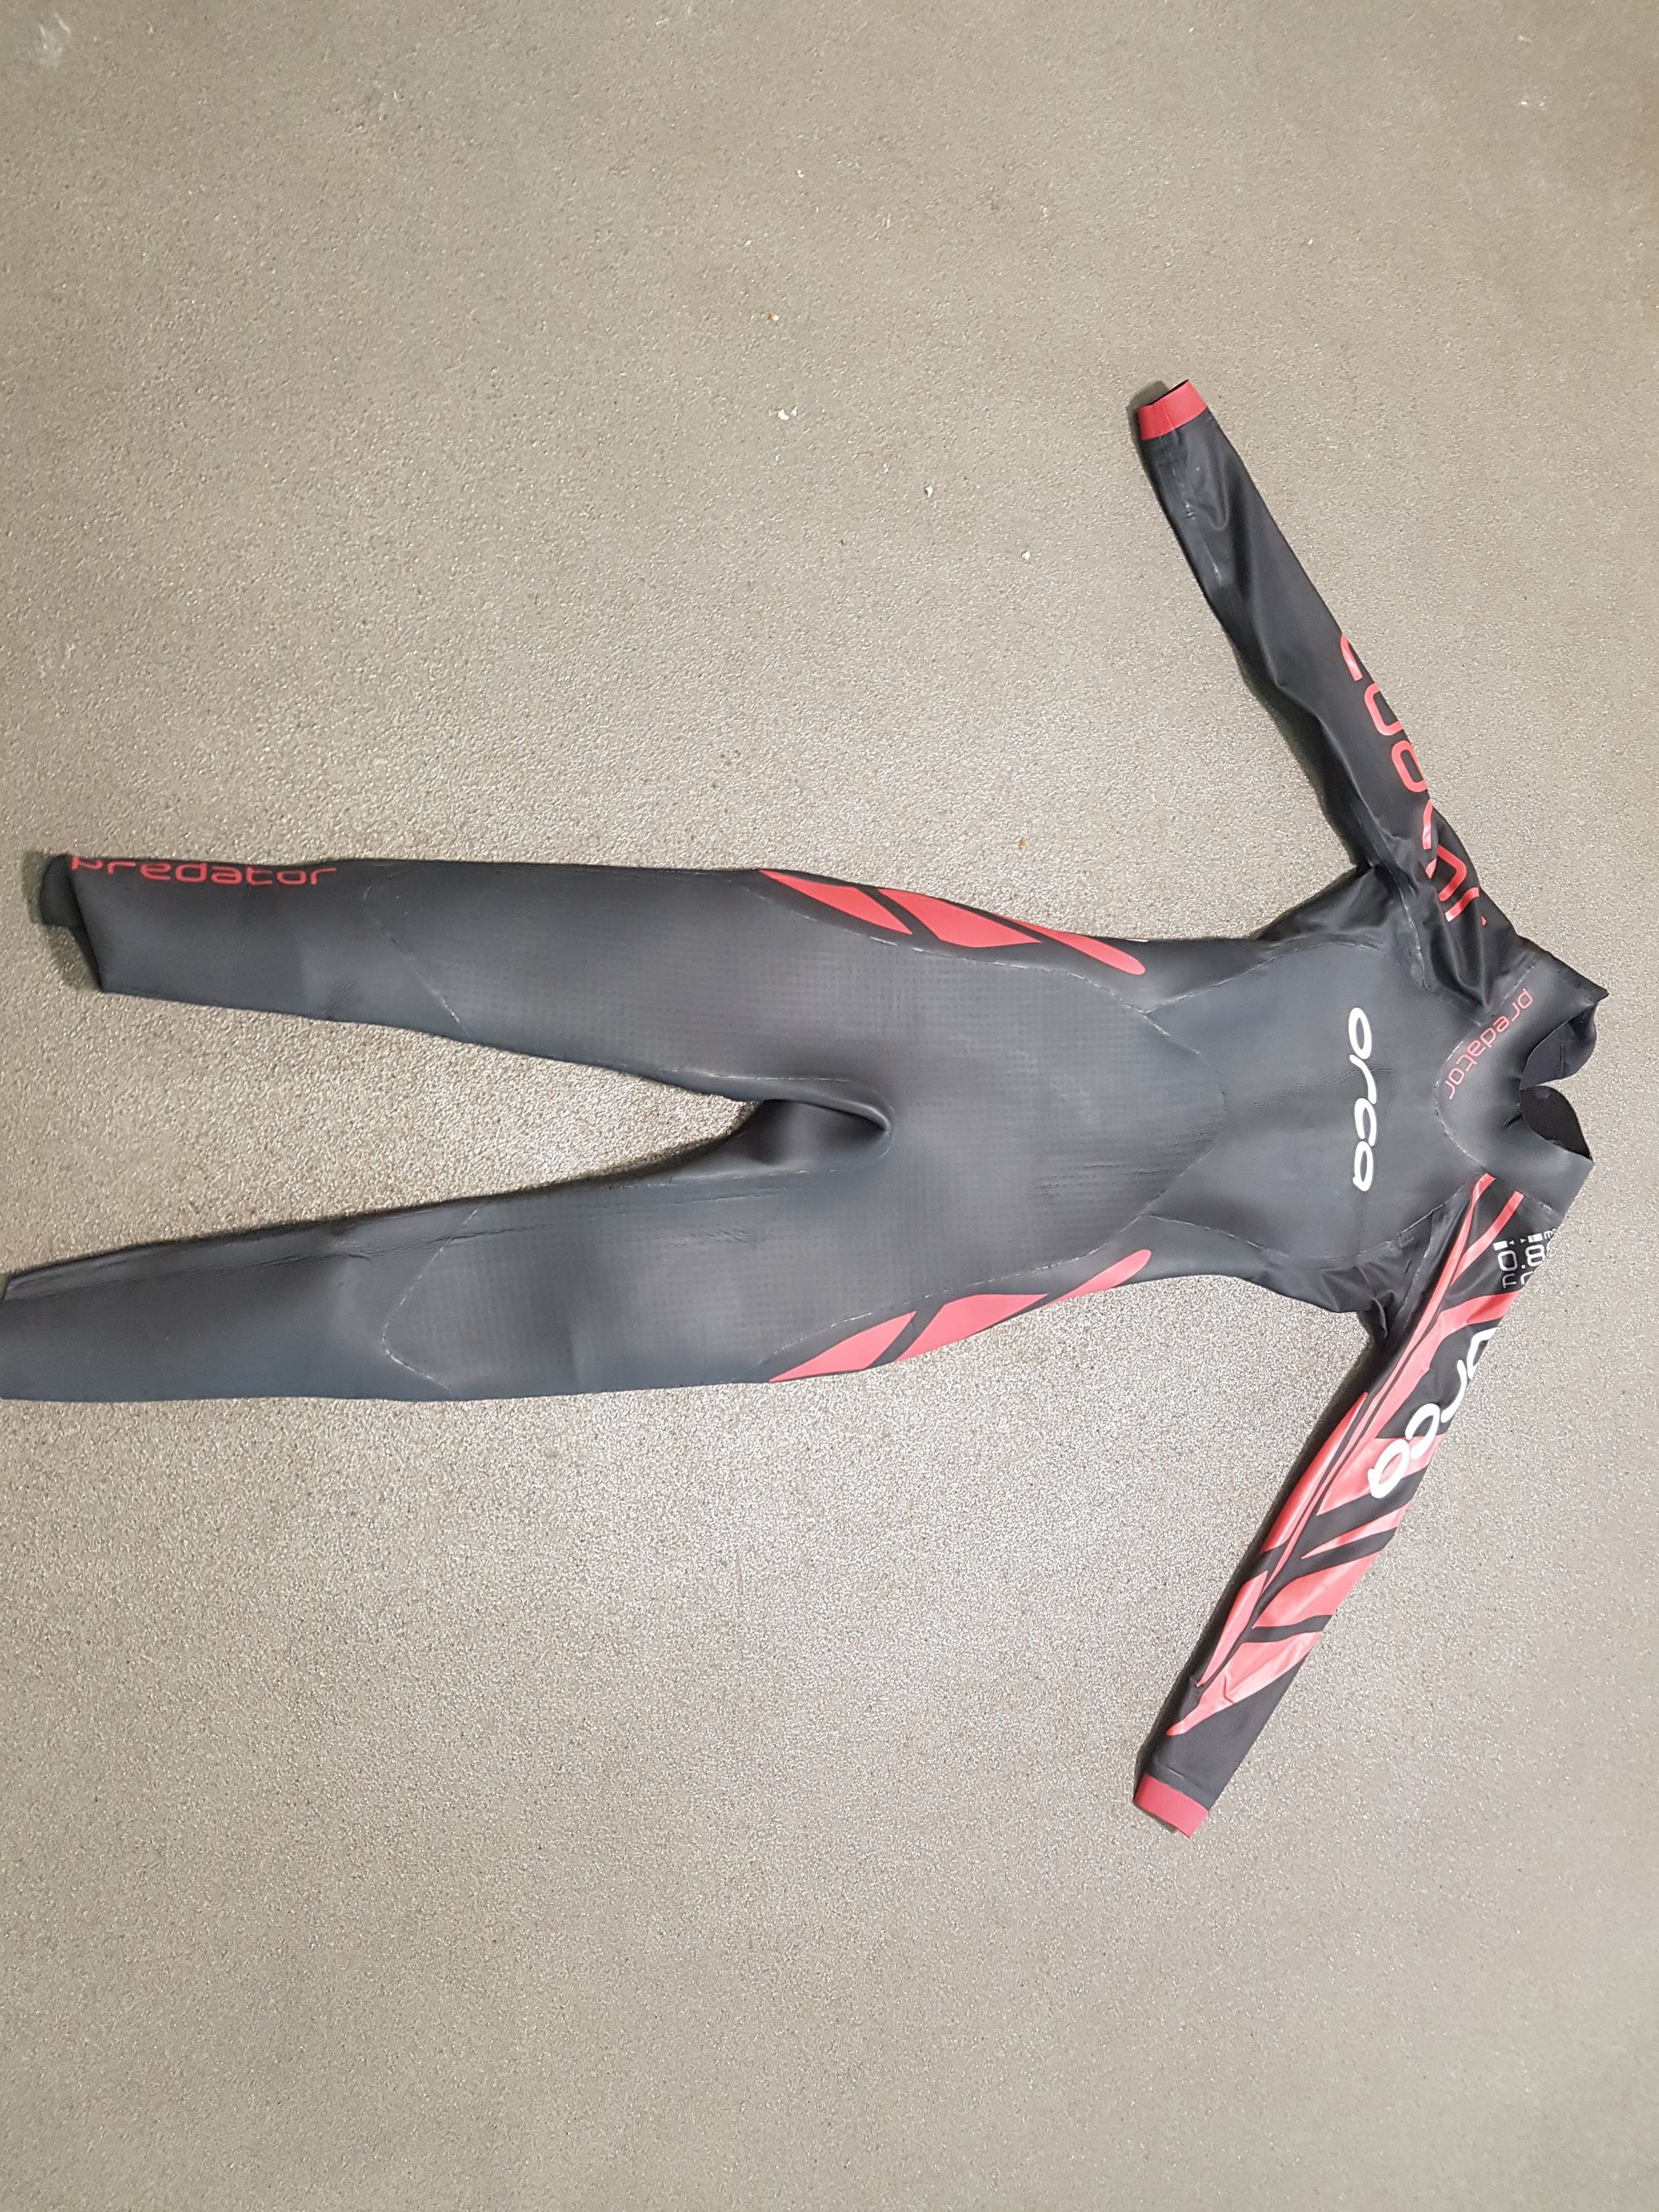 Image of the 2017 Orca Predator wetsuit for triathlon.